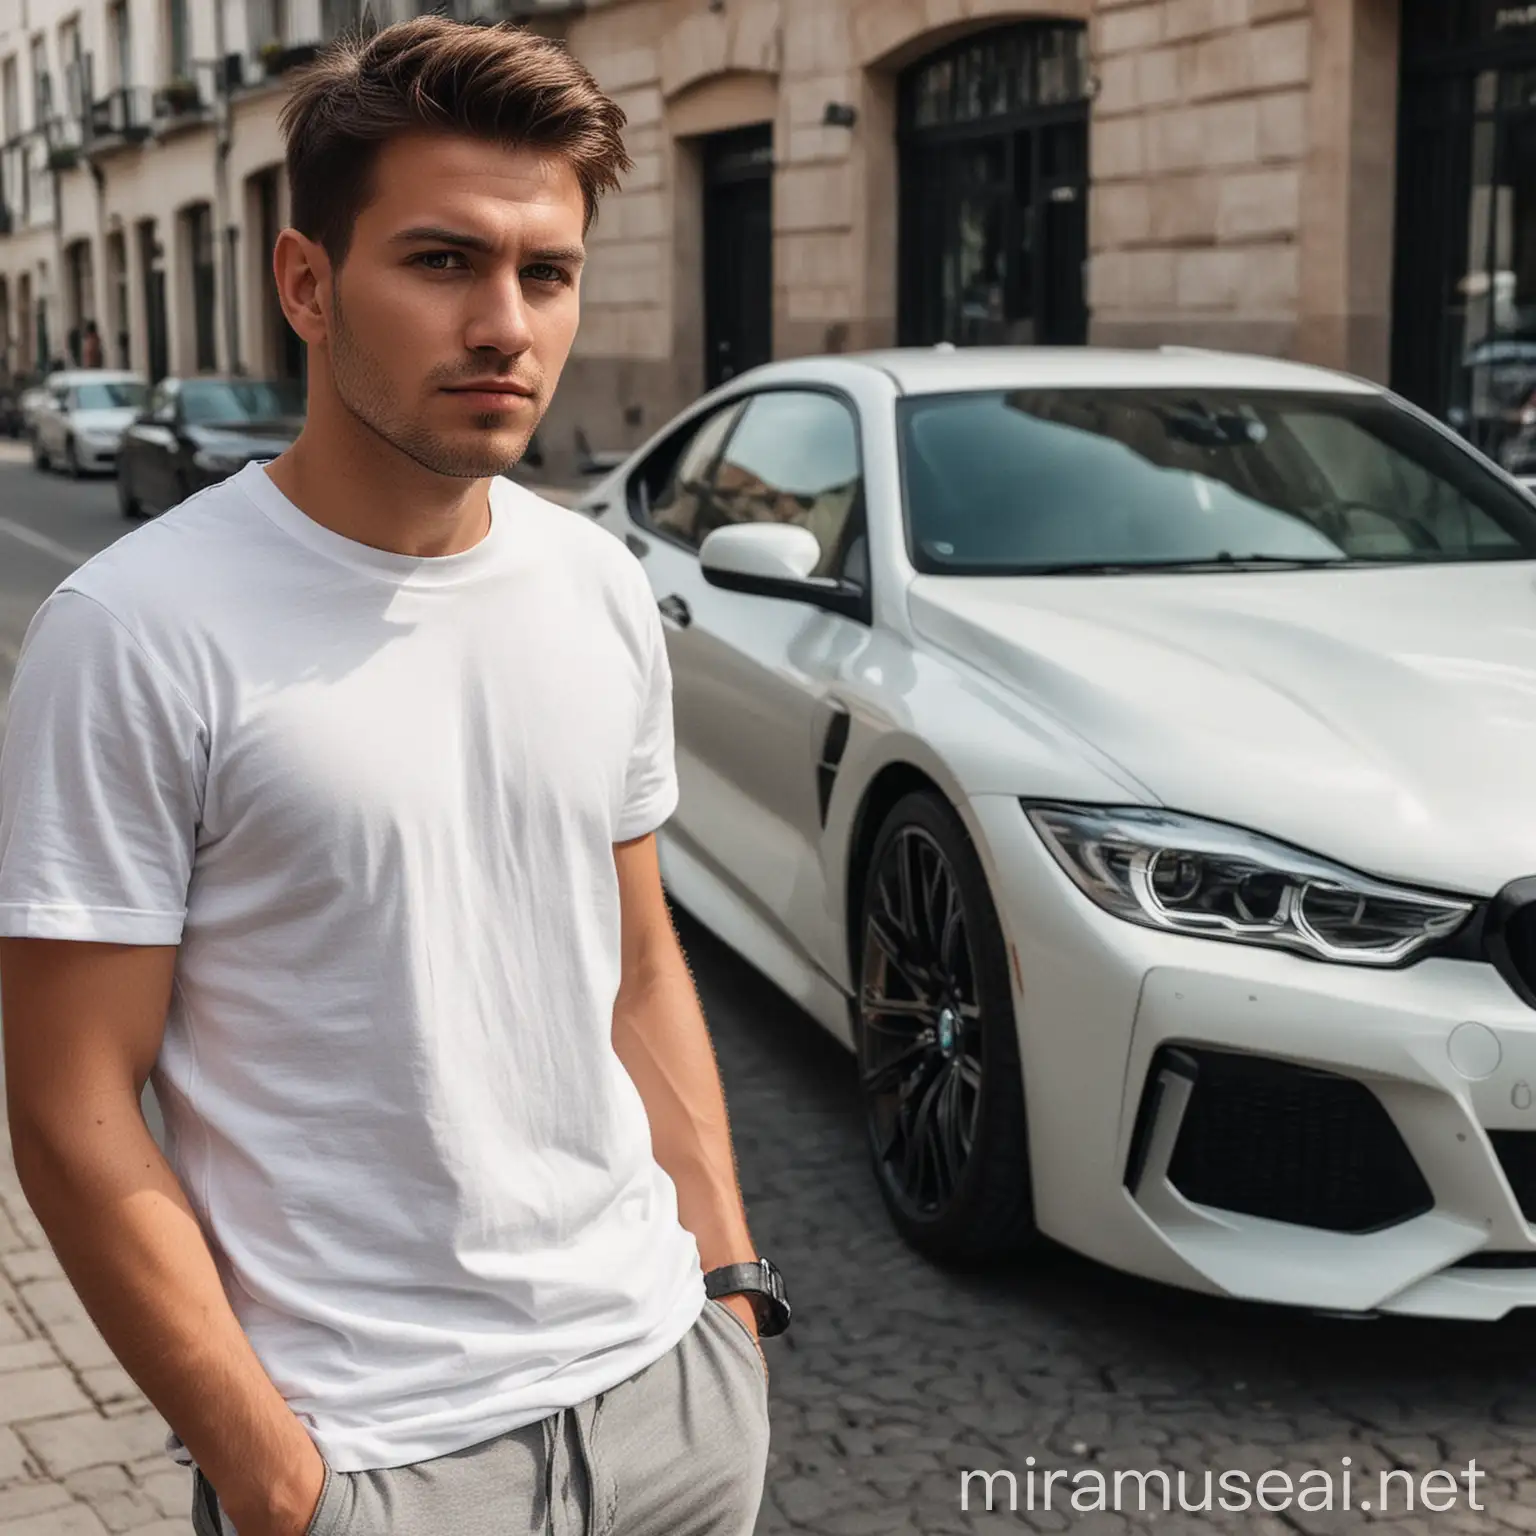 Man in White TShirt Standing Beside BMW Luxury Car